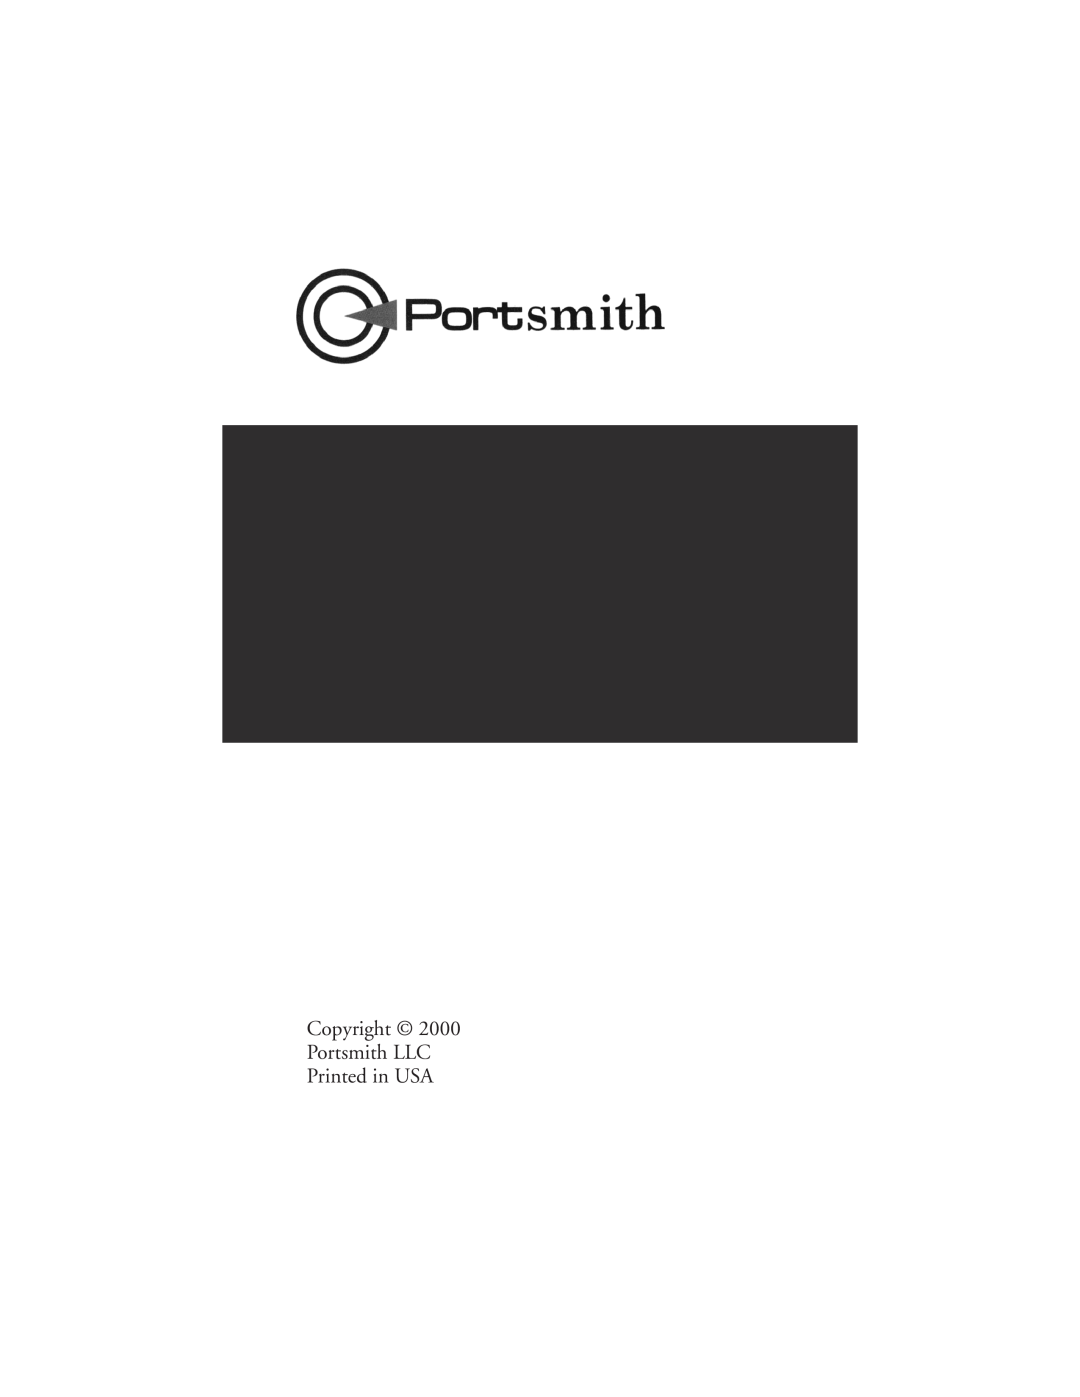 Portsmith USB user manual Copyright Portsmith LLC Printed in USA 